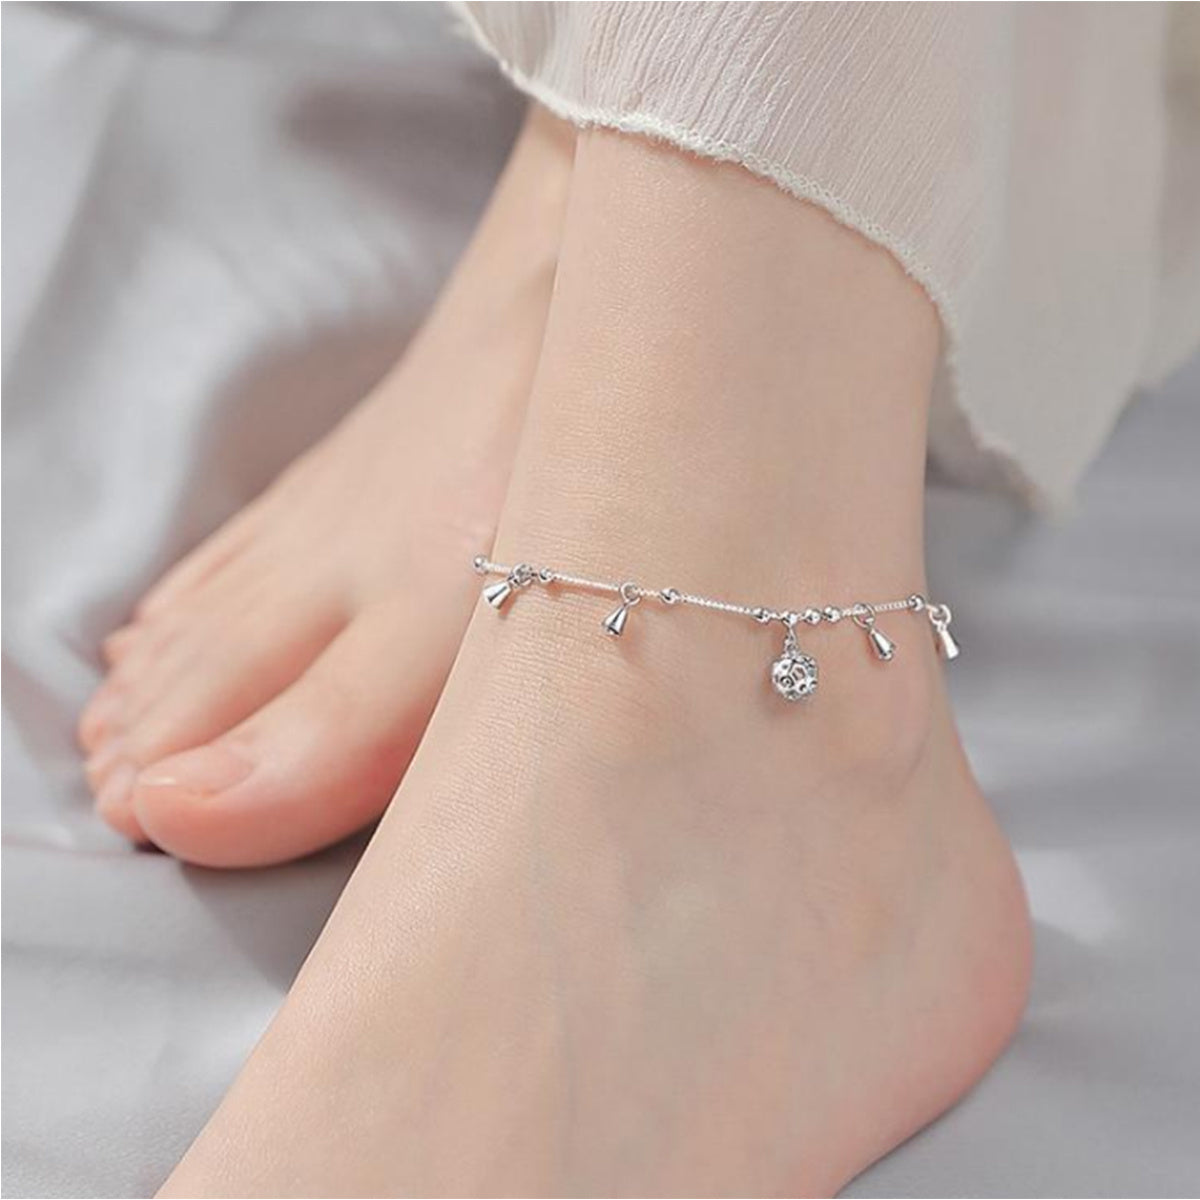 Women's Sterling Silver Anklet, Dainty Adjustable Anklets